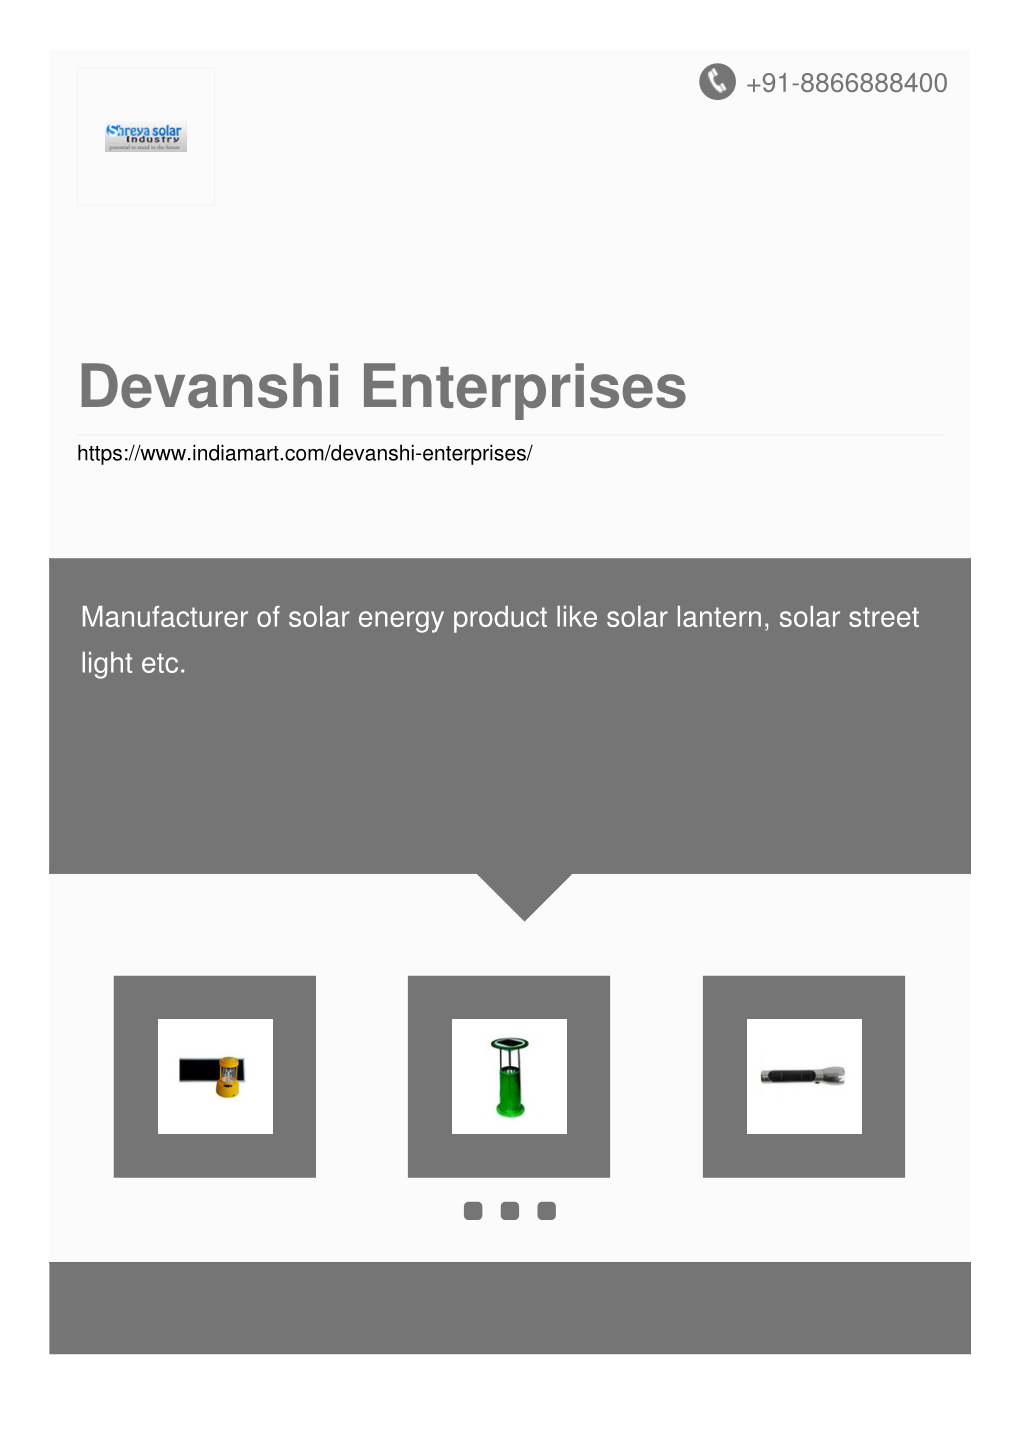 Devanshi Enterprises